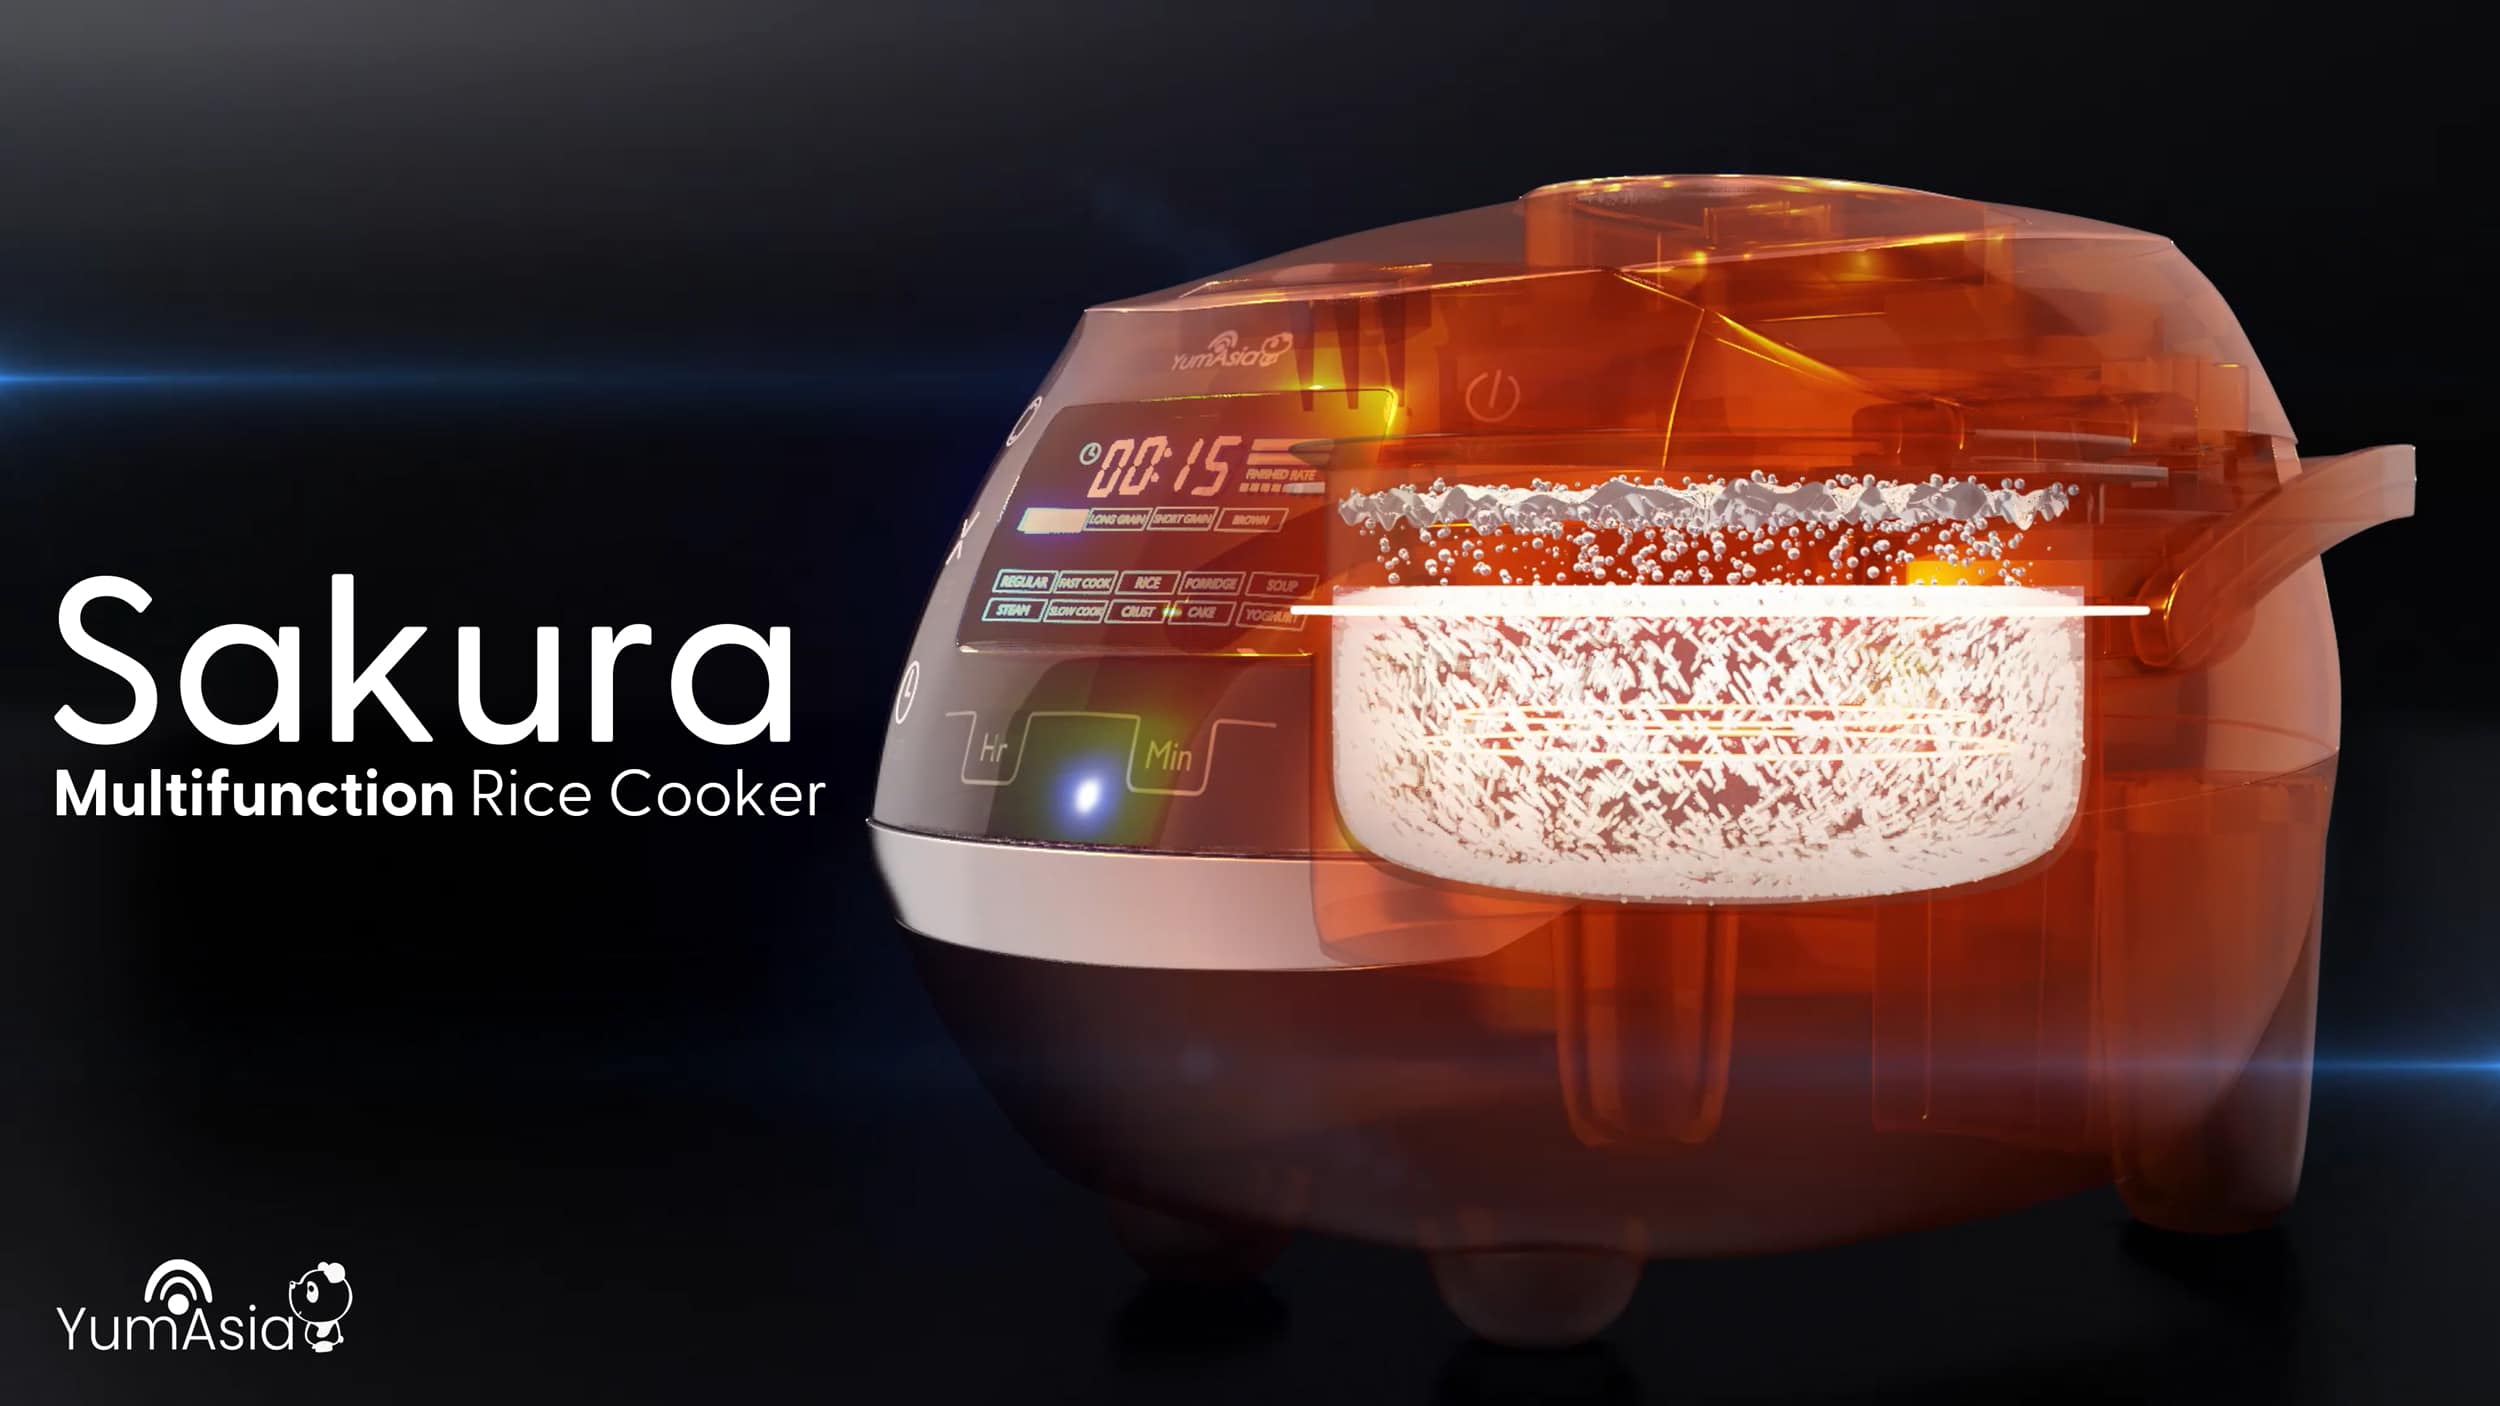 Sakura Advanced Fuzzy Logic Ceramic Rice Cooker - Yum Asia USA